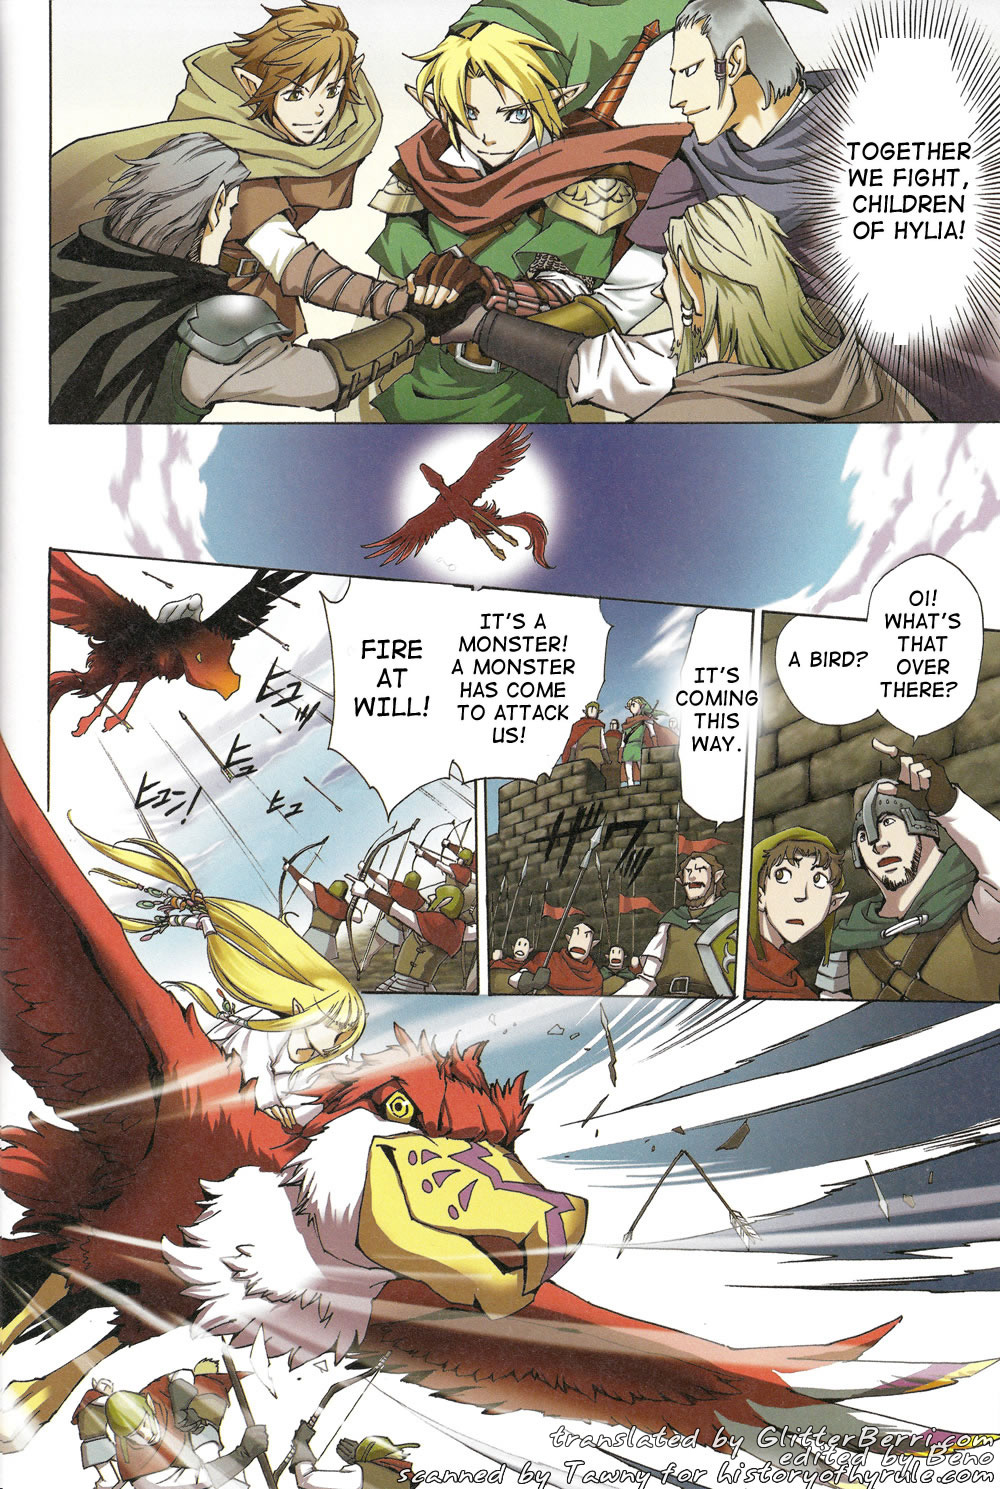 Skyward sword prequel manga